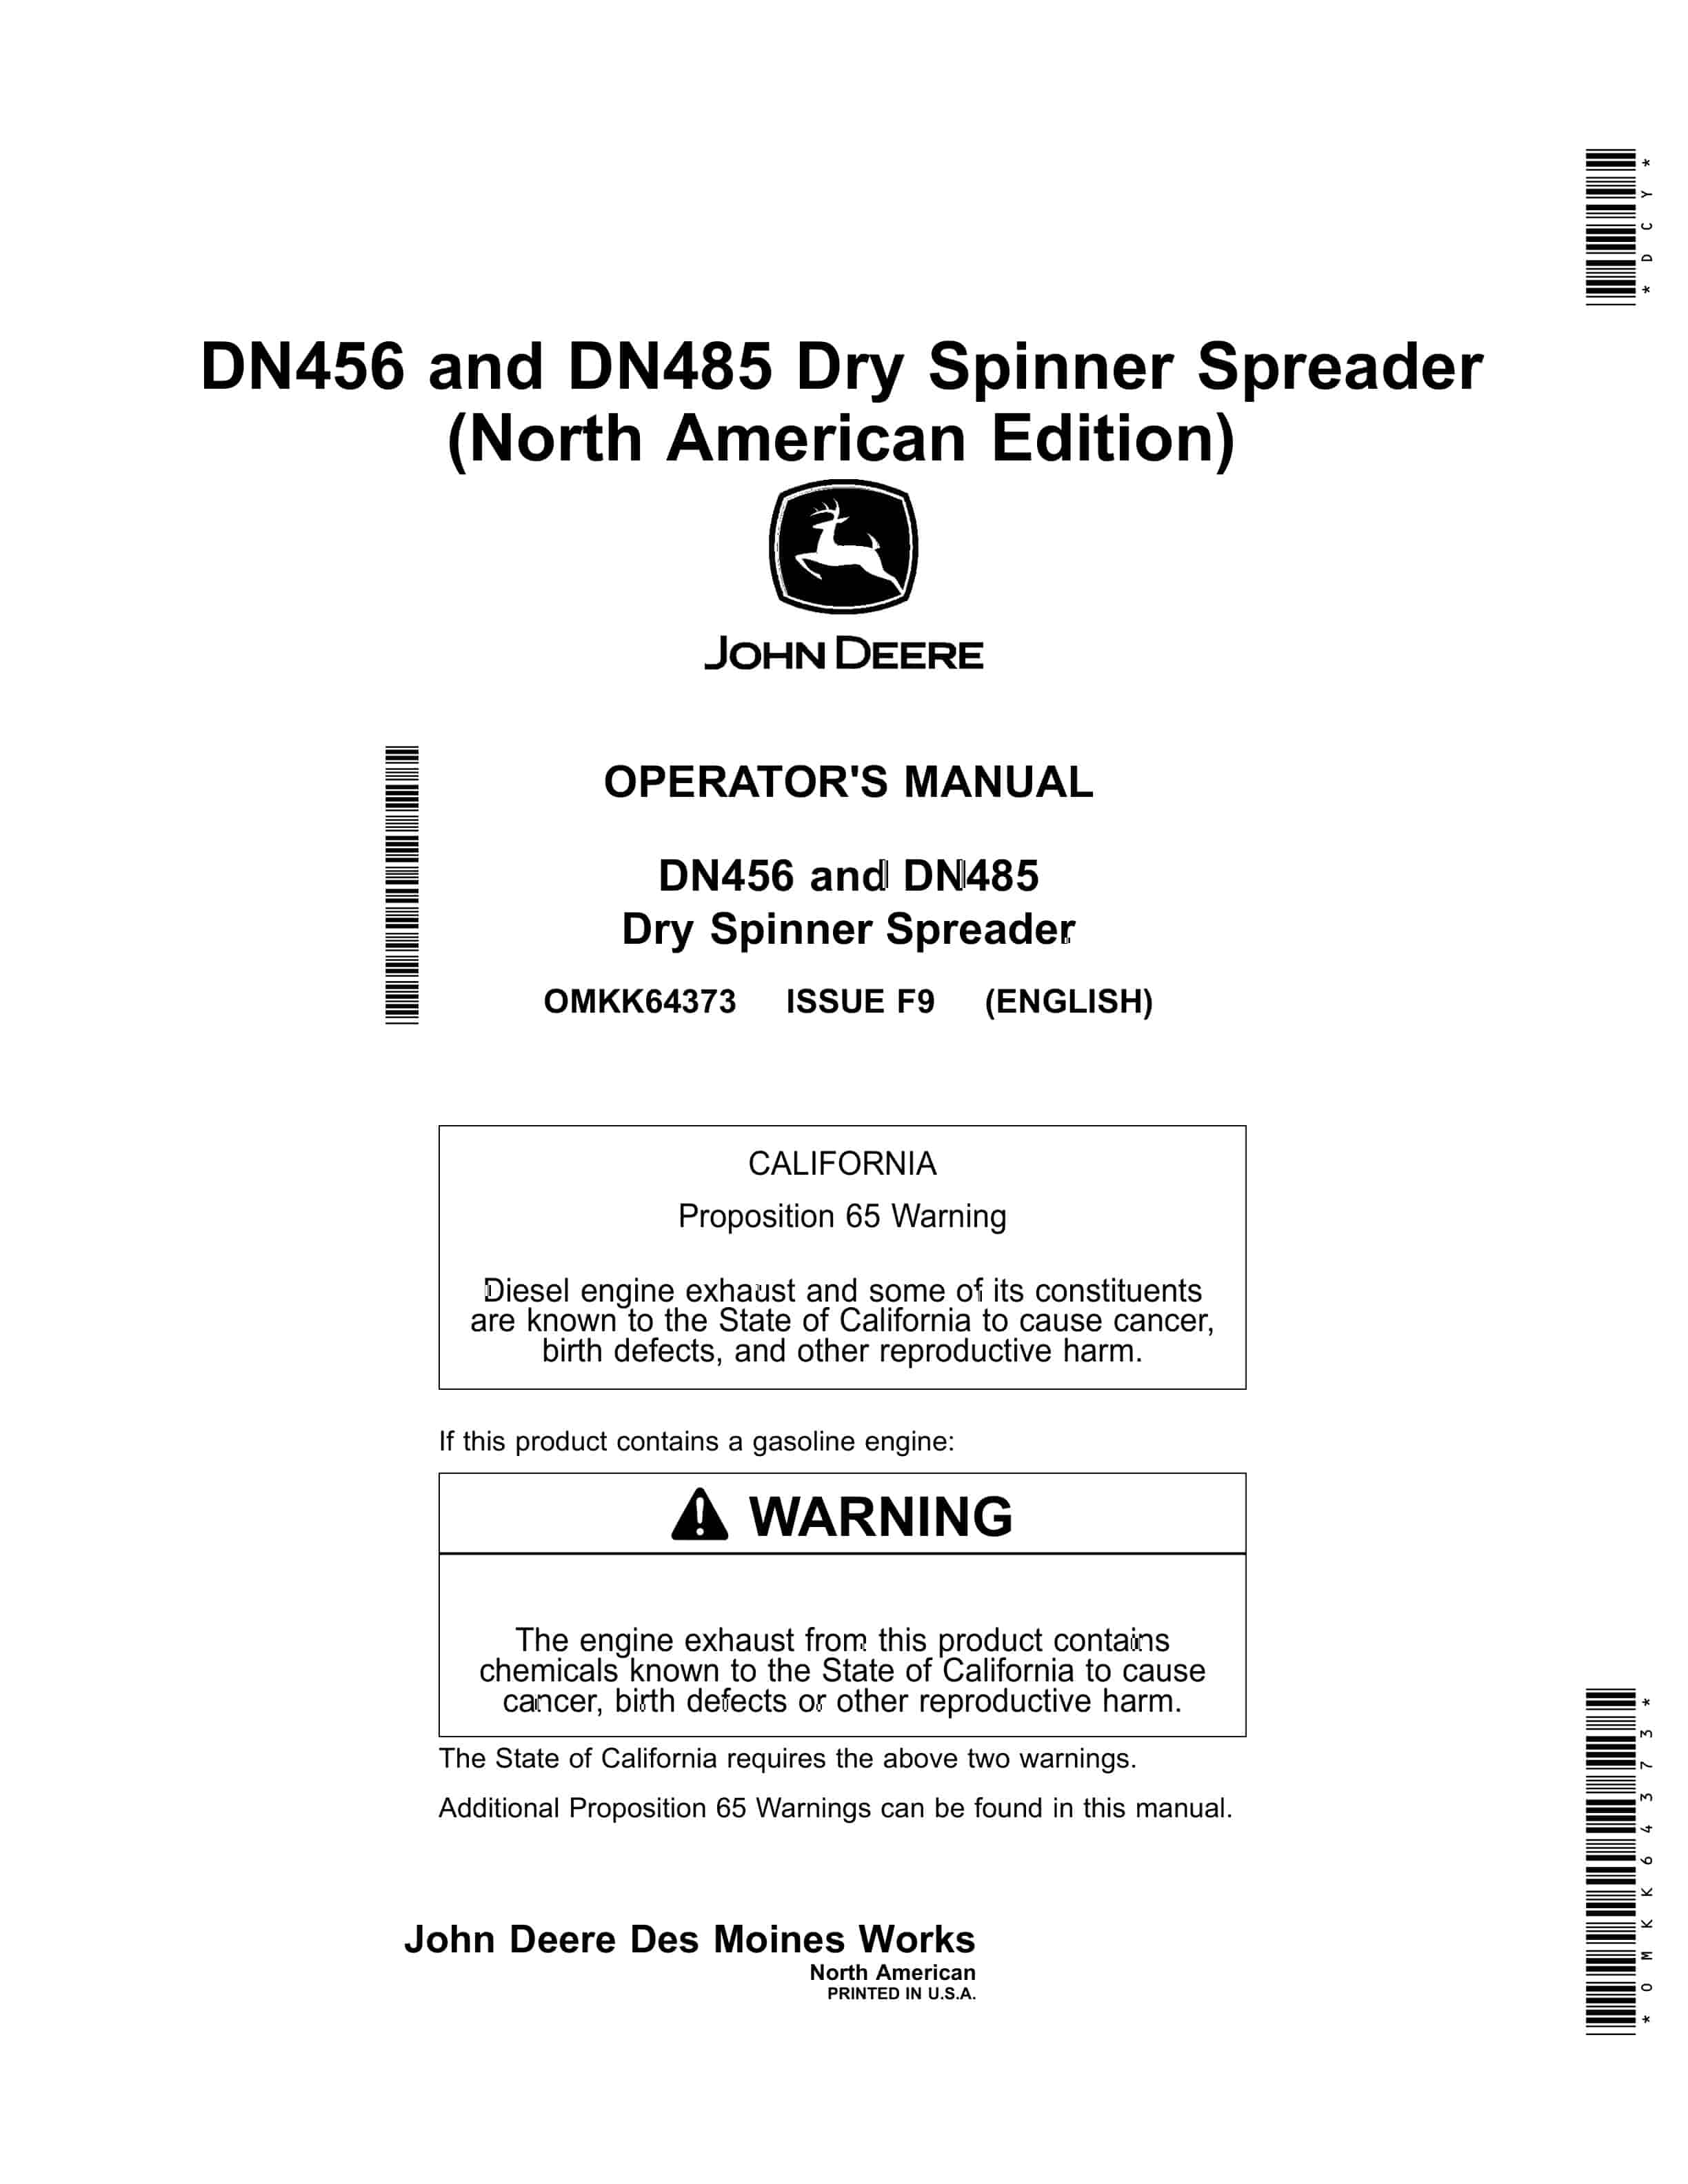 John Deere DN456 and DN485 Dry Spinner Spreader Operator Manual OMKK64373 1